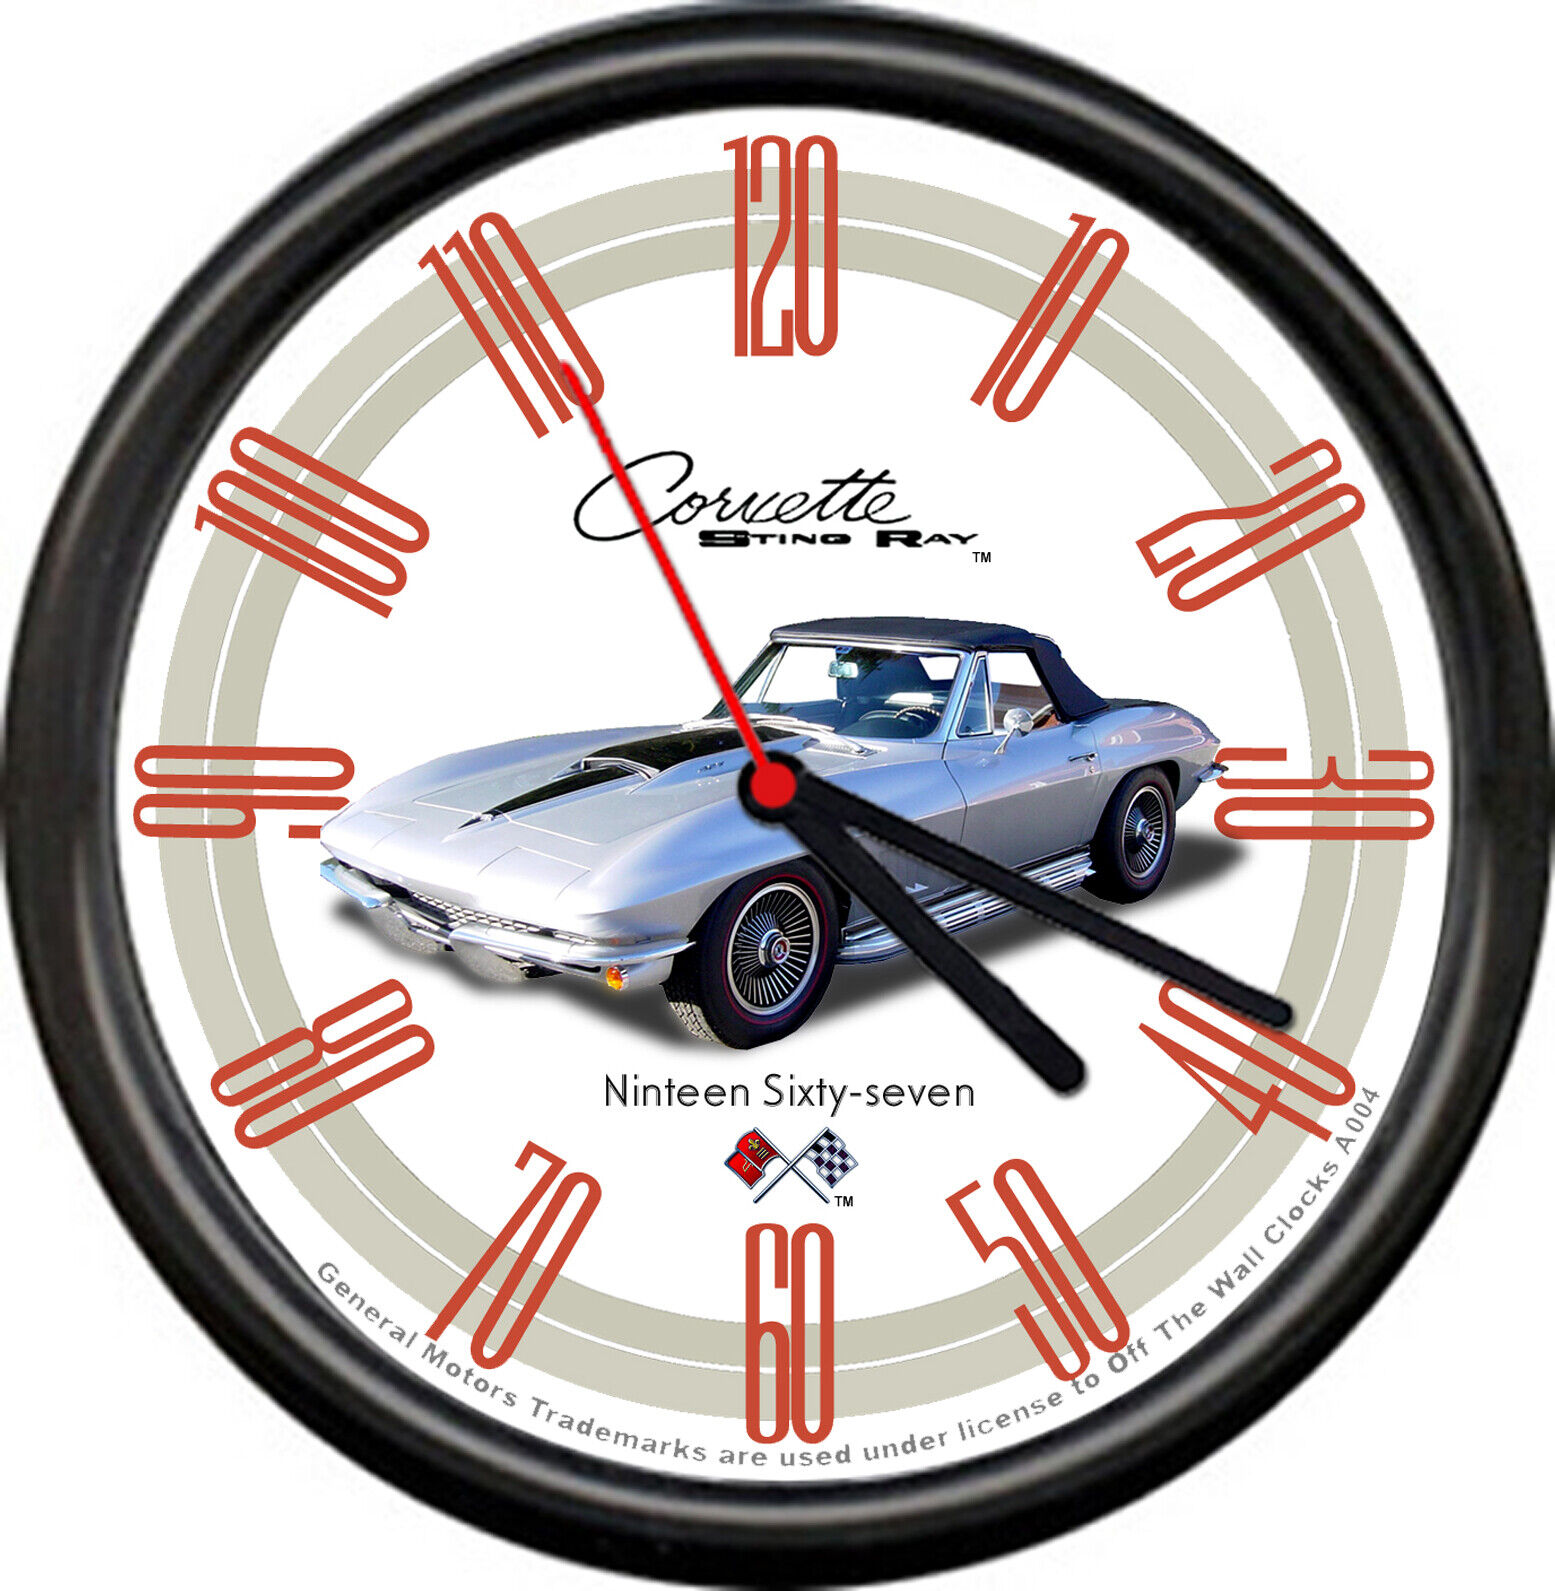 Licensed 1967 Corvette StingRay Convertible General Motors Sign Wall Clock